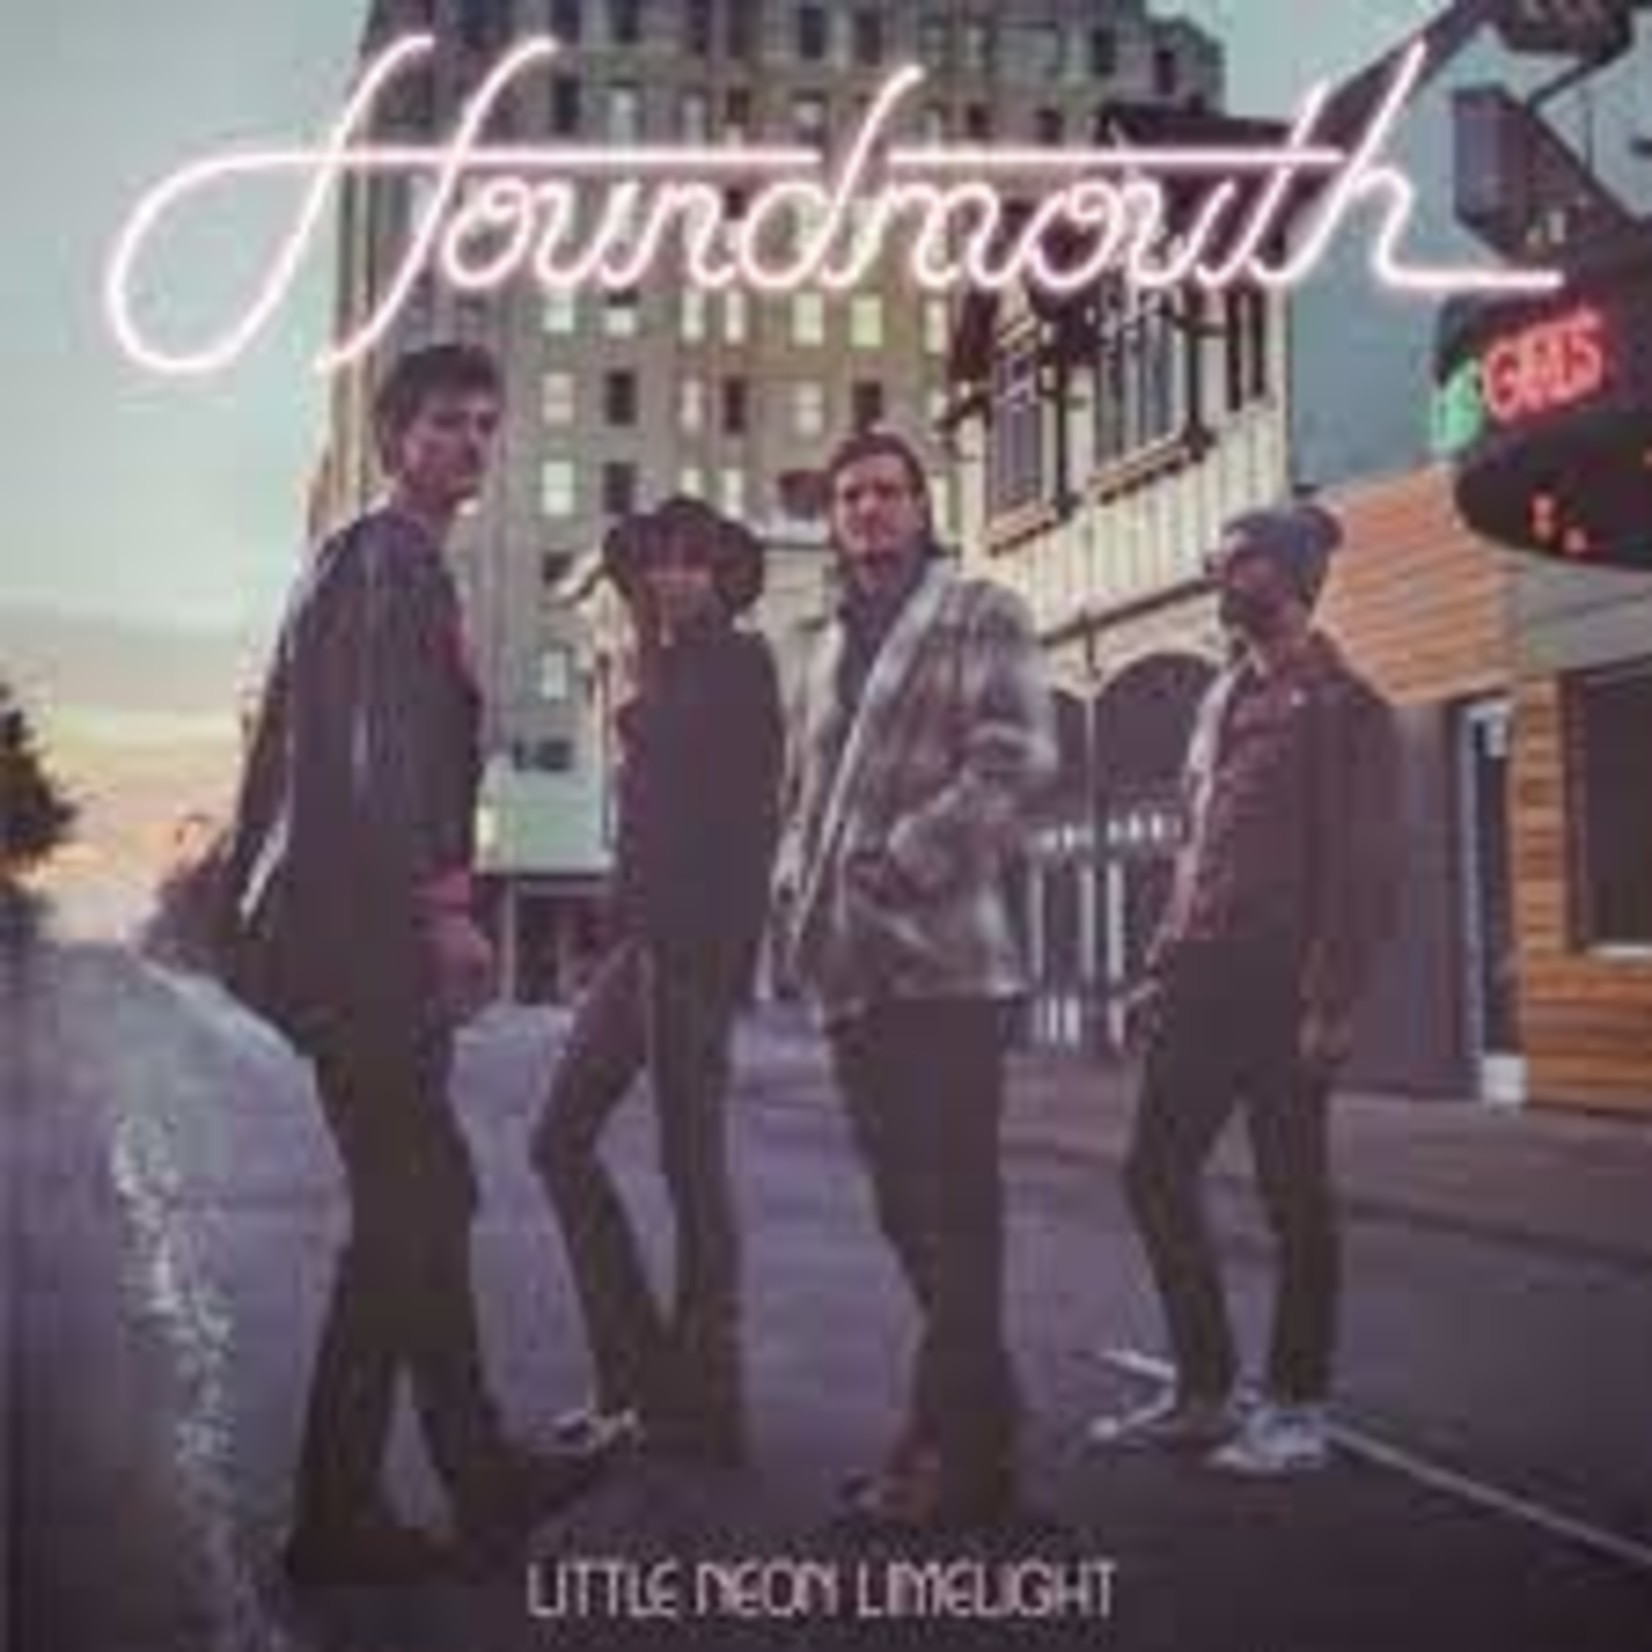 [New] Houndmouth - Little Neon Limelight